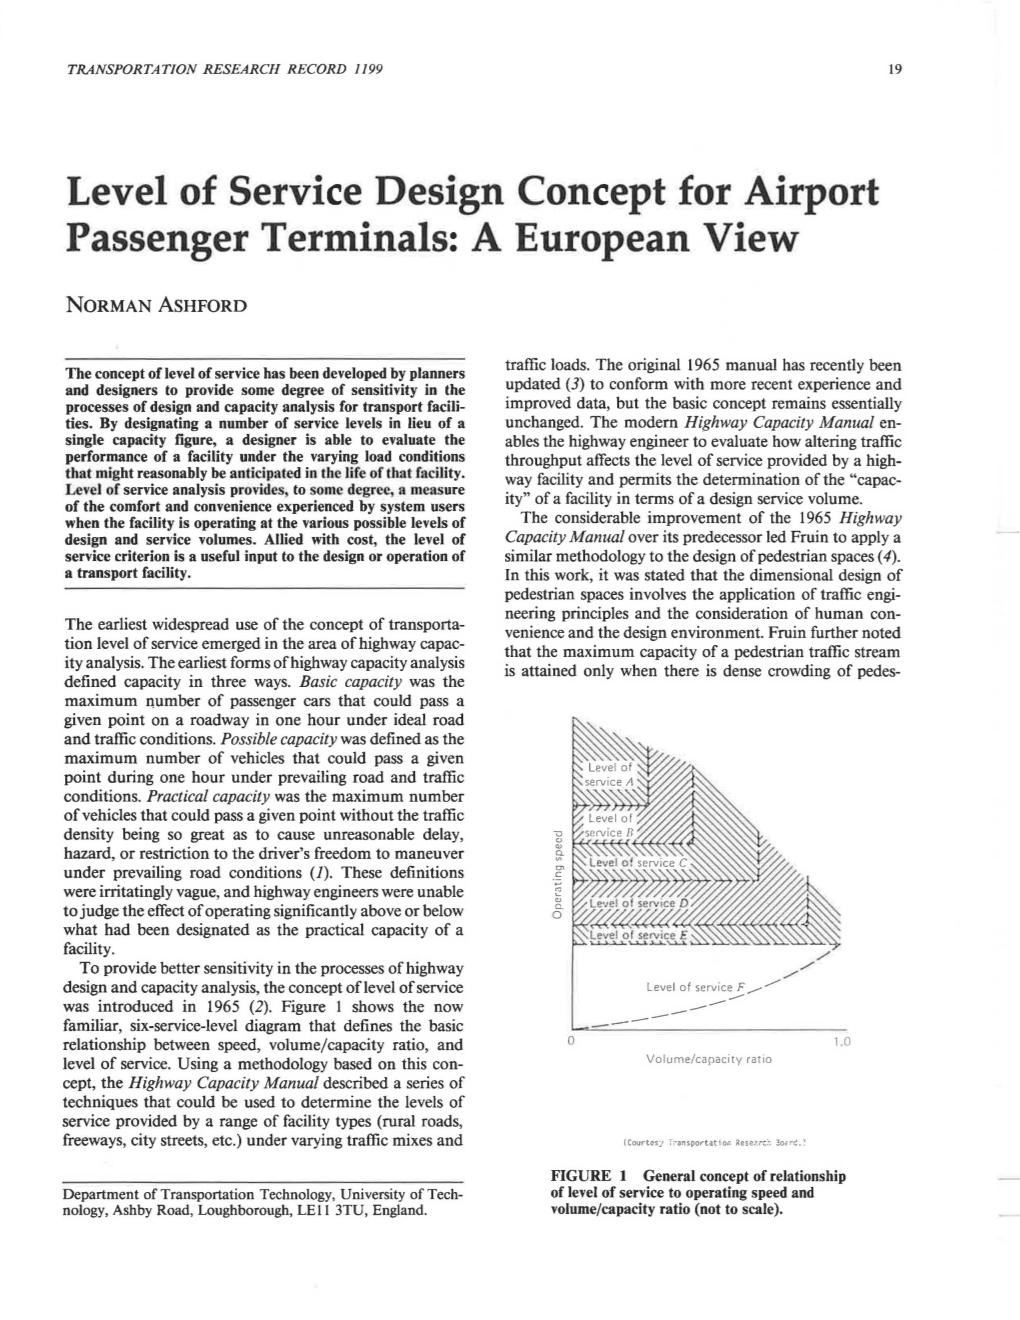 Level of Service Design Concept for Airport Passenger Terminals: a European View